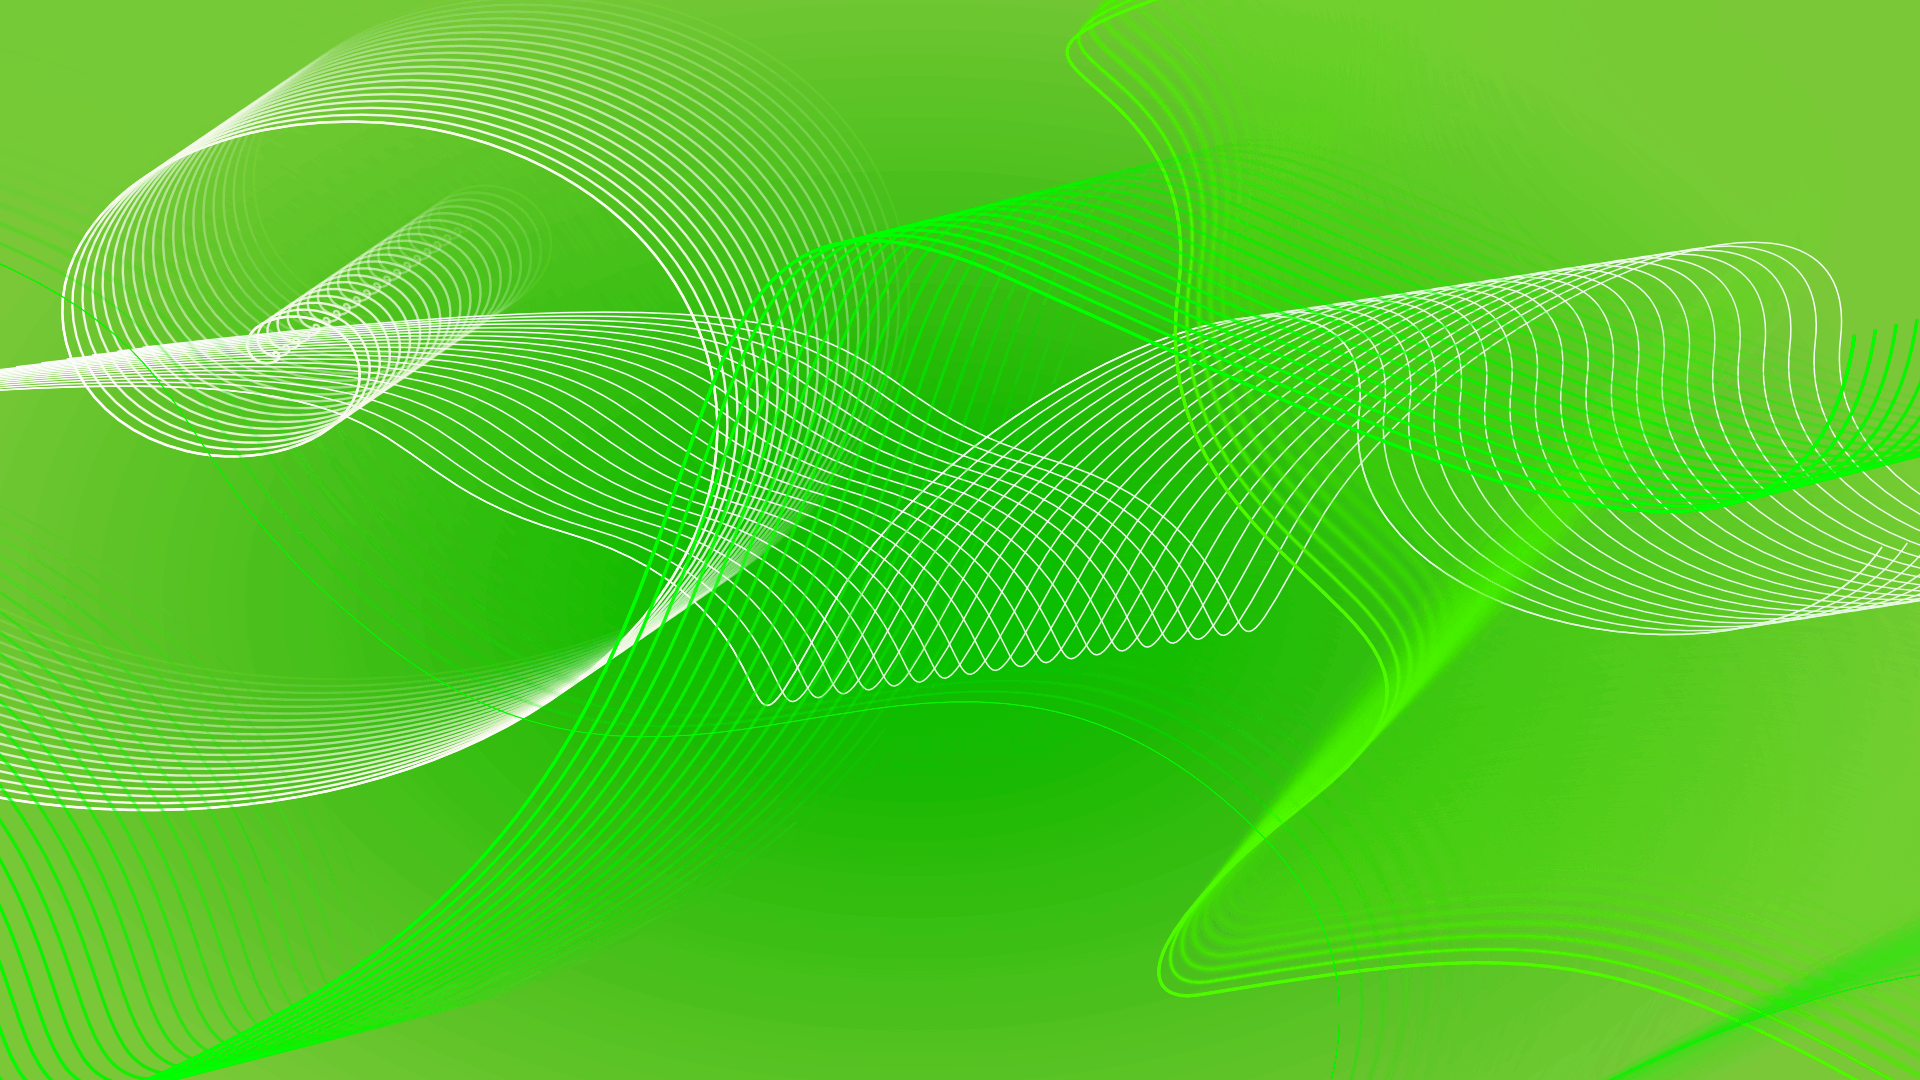 Set green spirals as background image